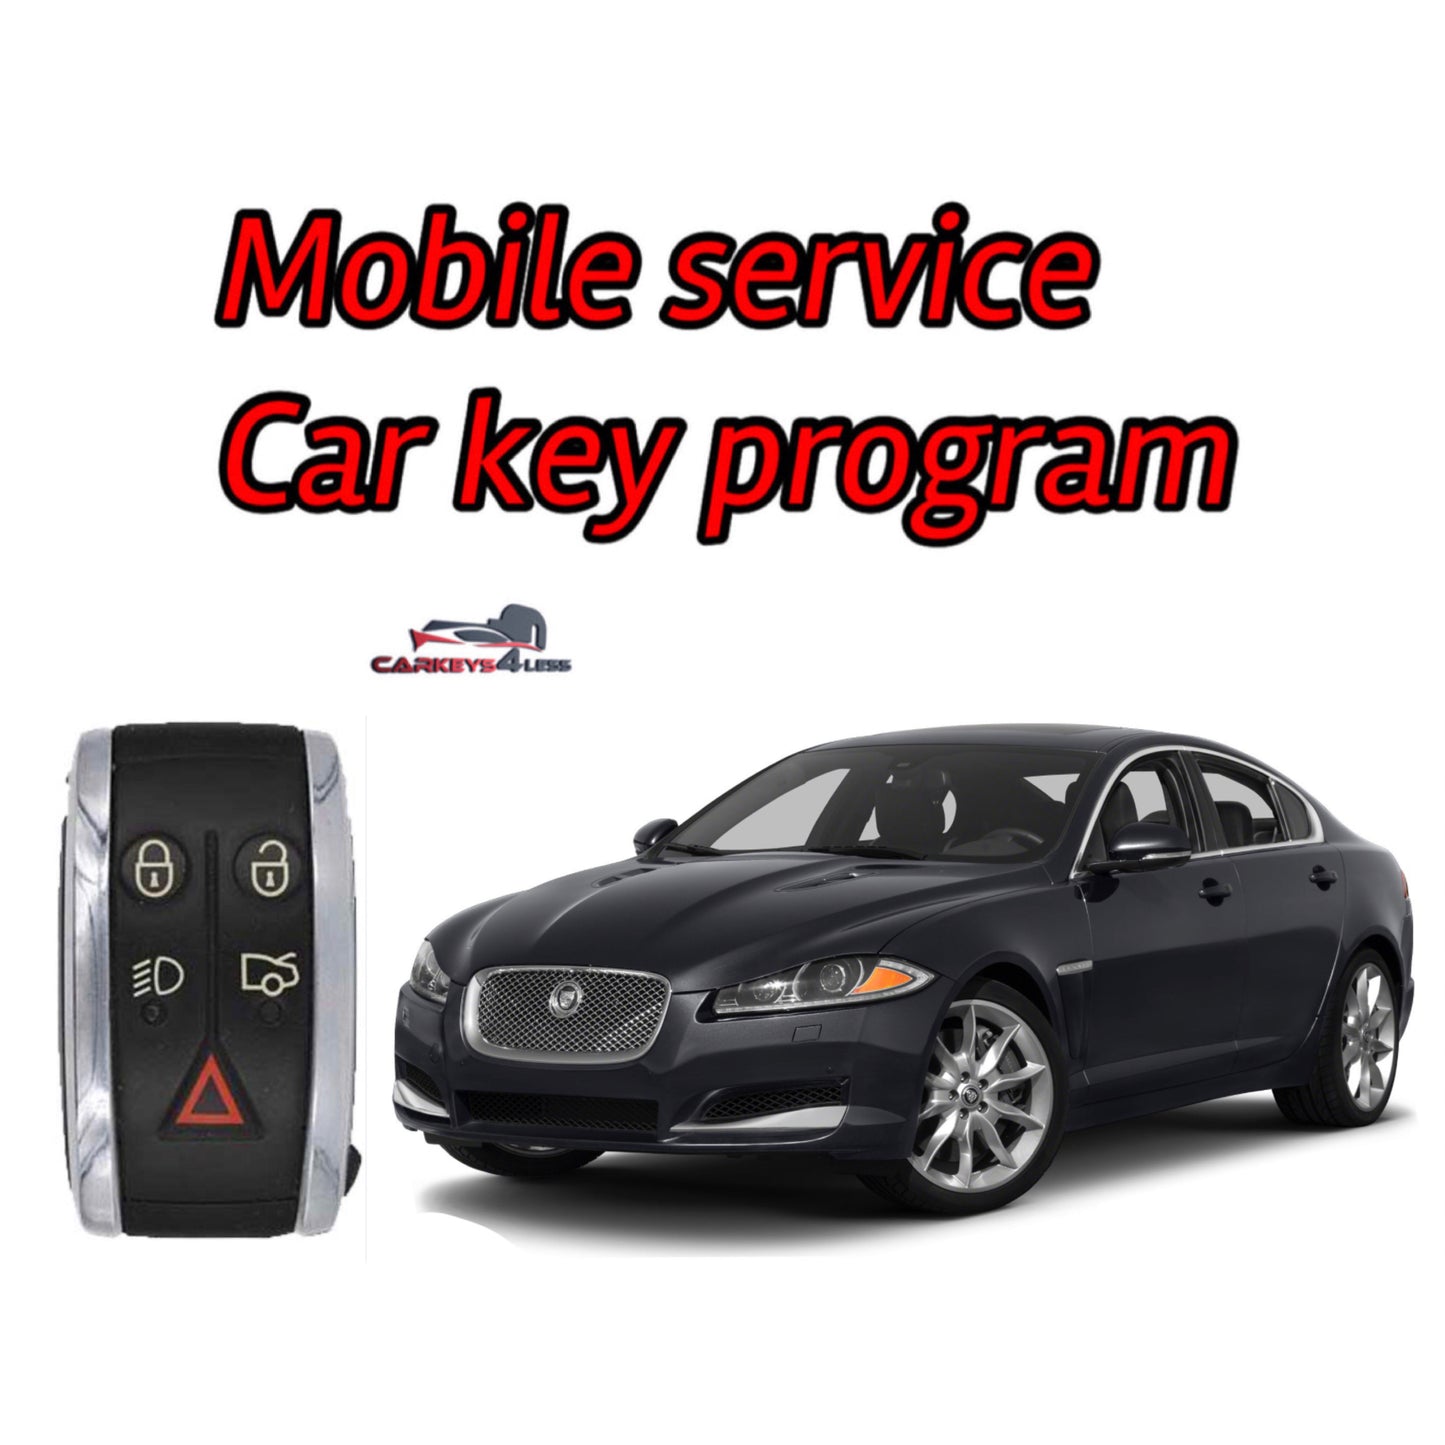 Mobile service for an aftermarket jaguar car key replacement